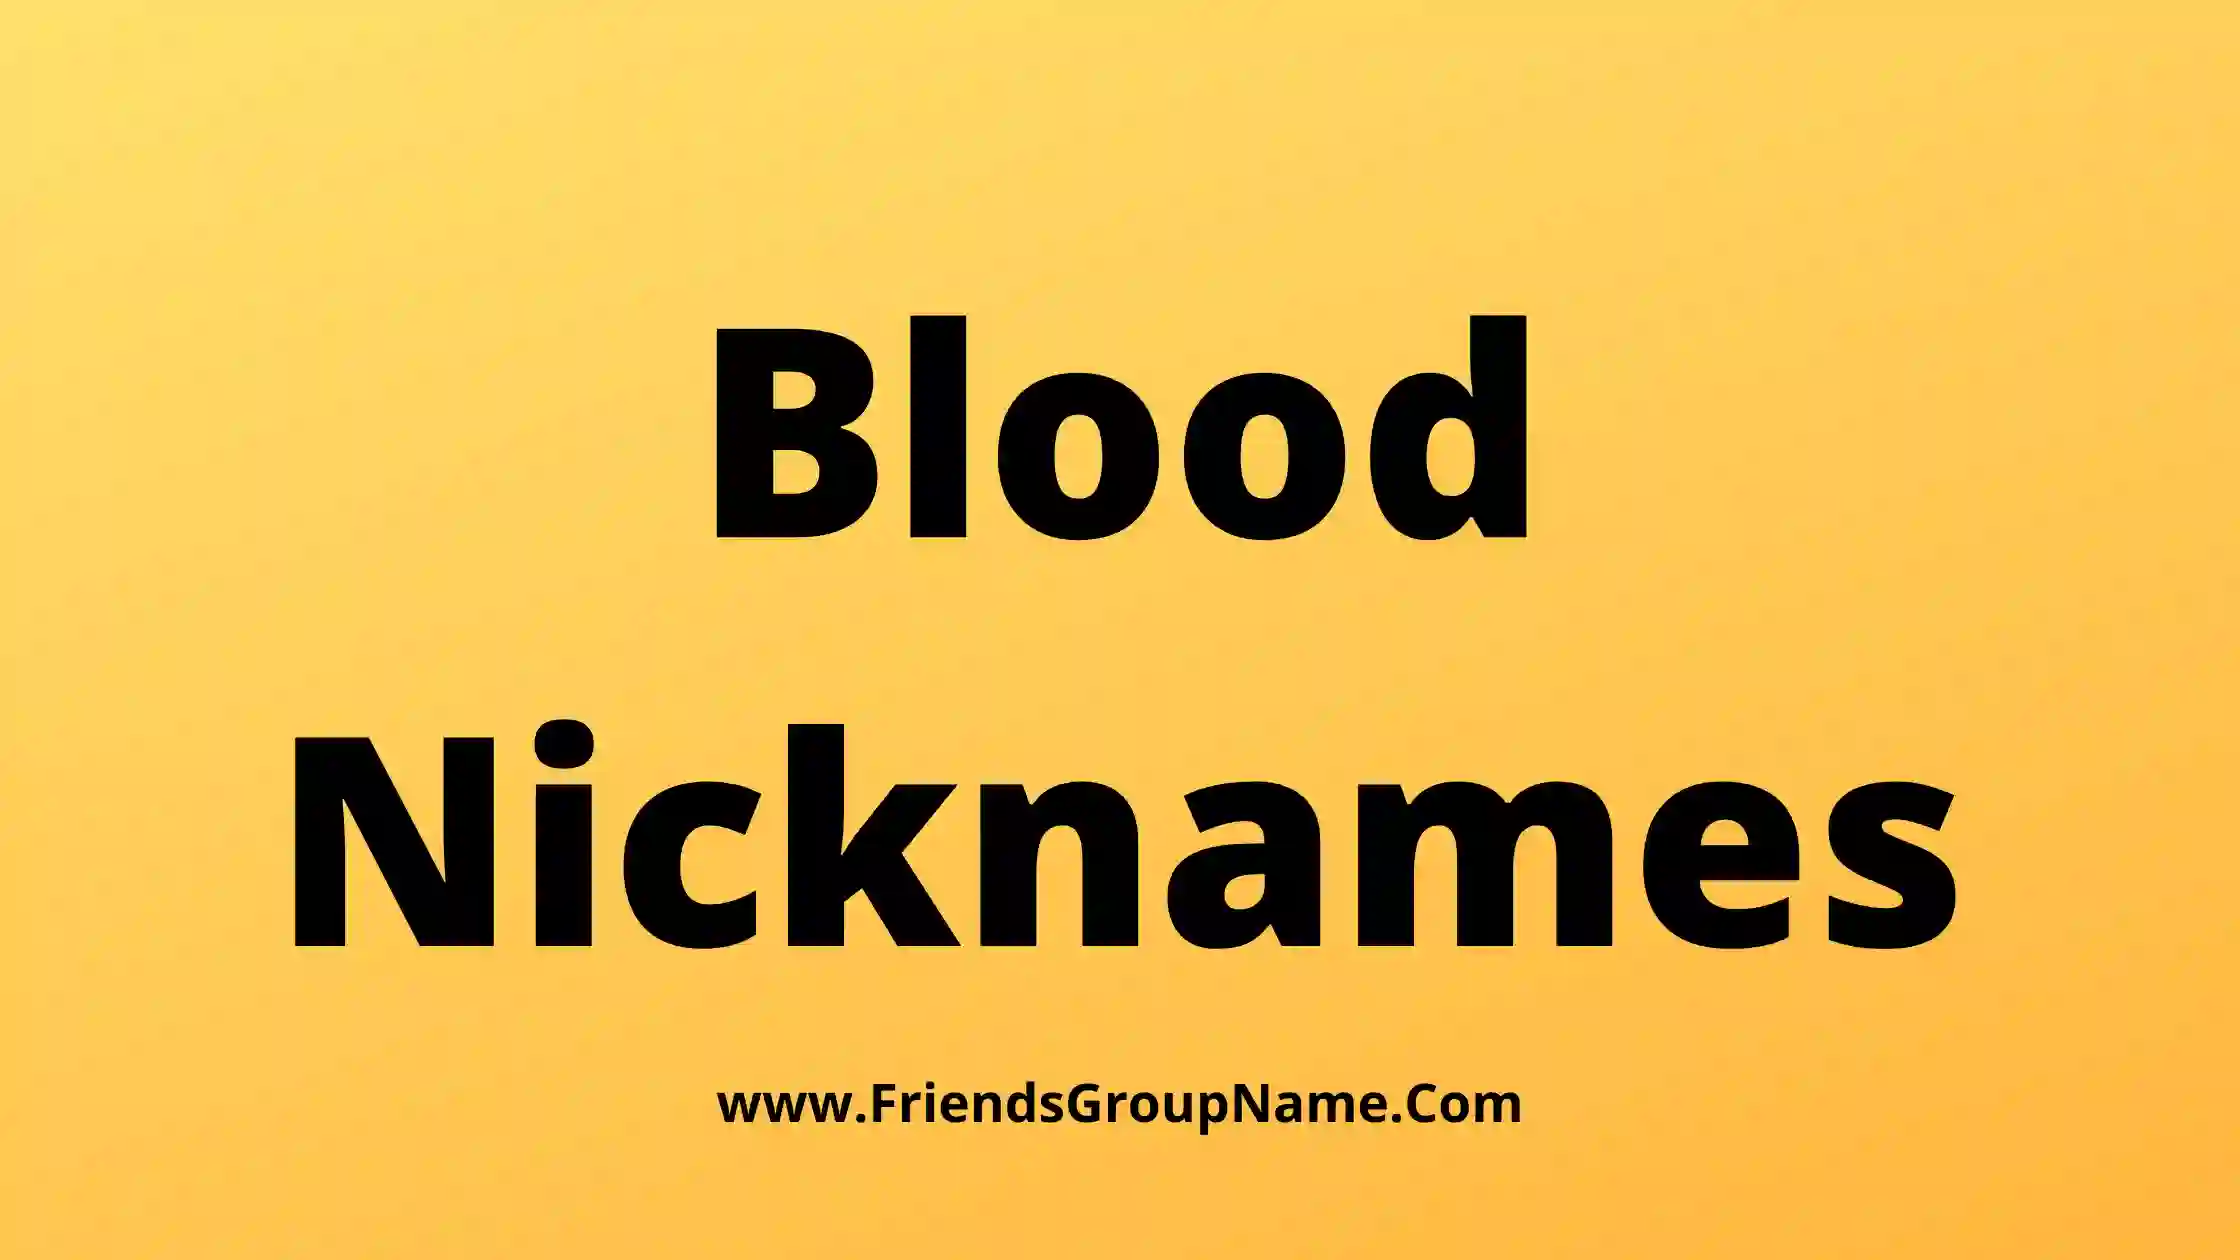 Blood Nicknames